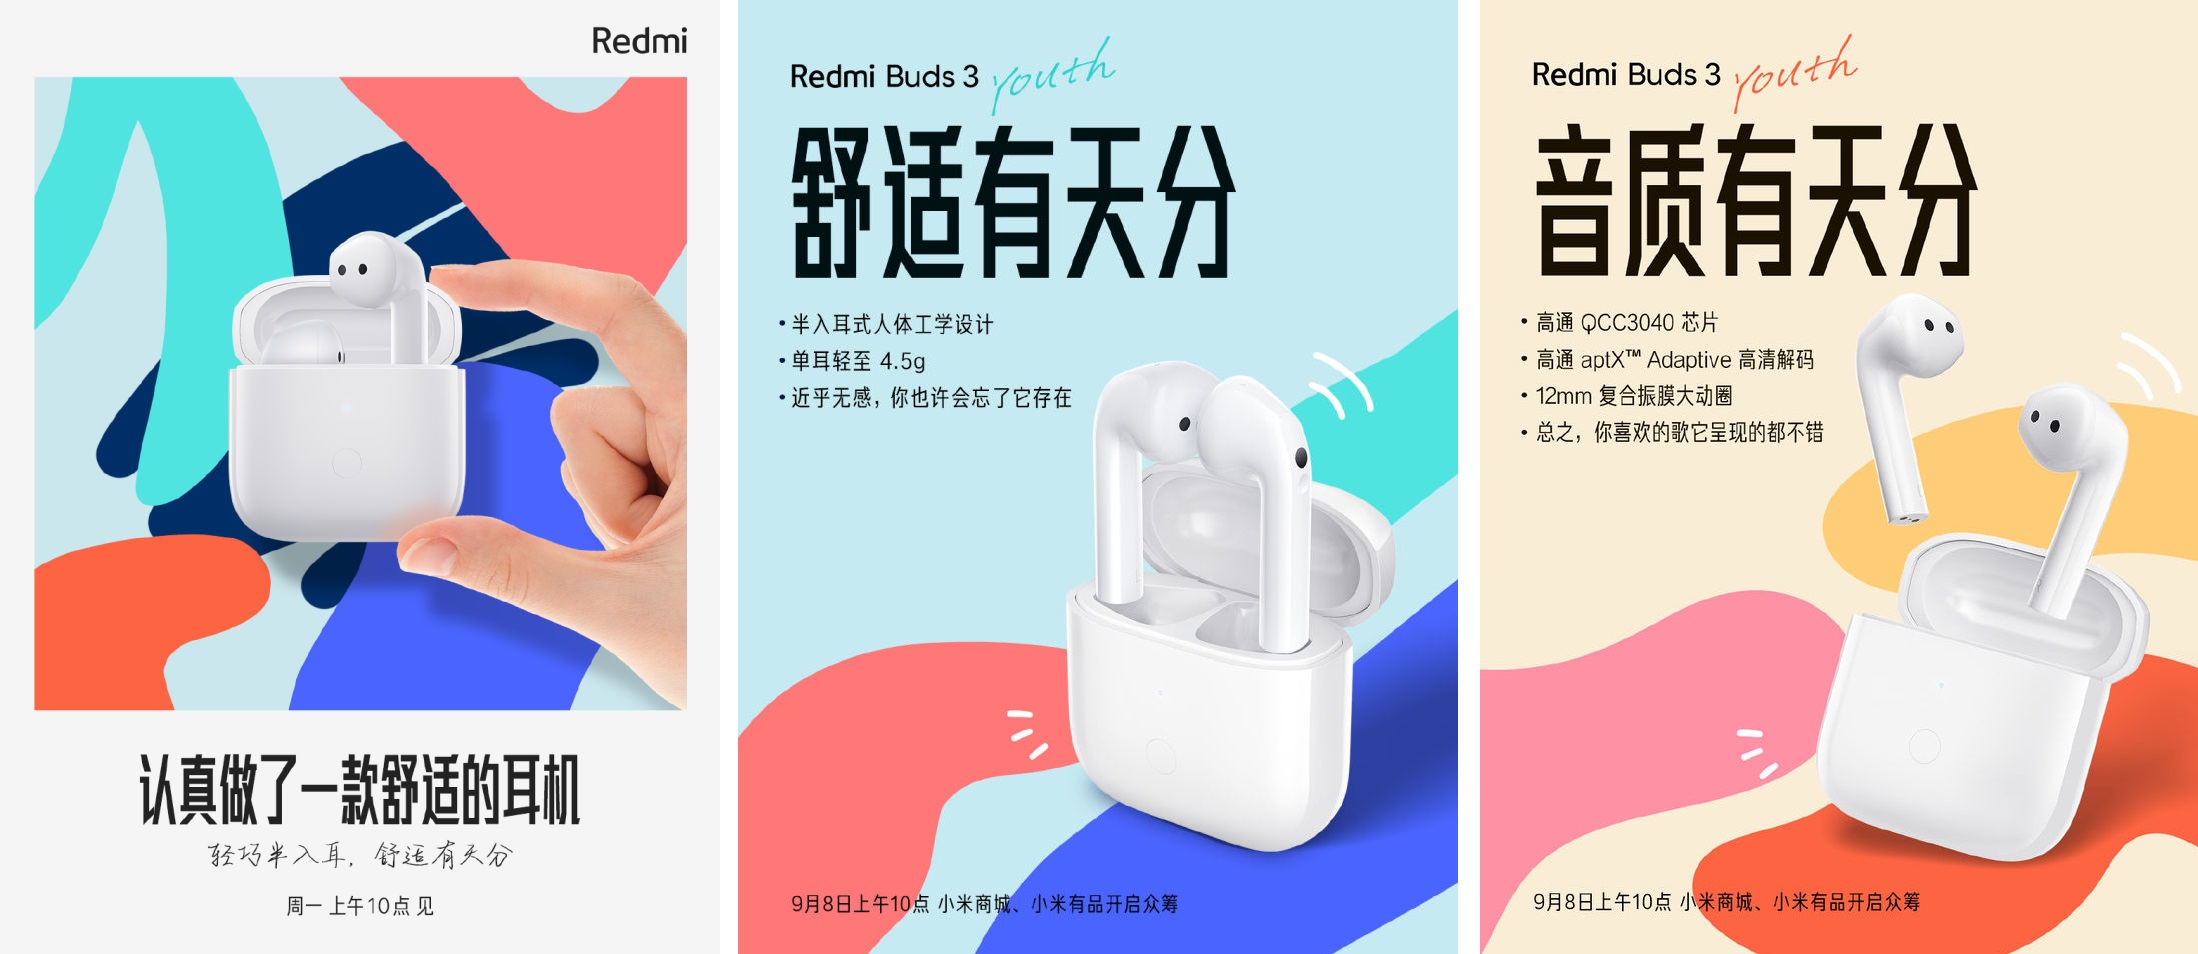 Cheap Xiaomi Redmi Buds 3 Headphones